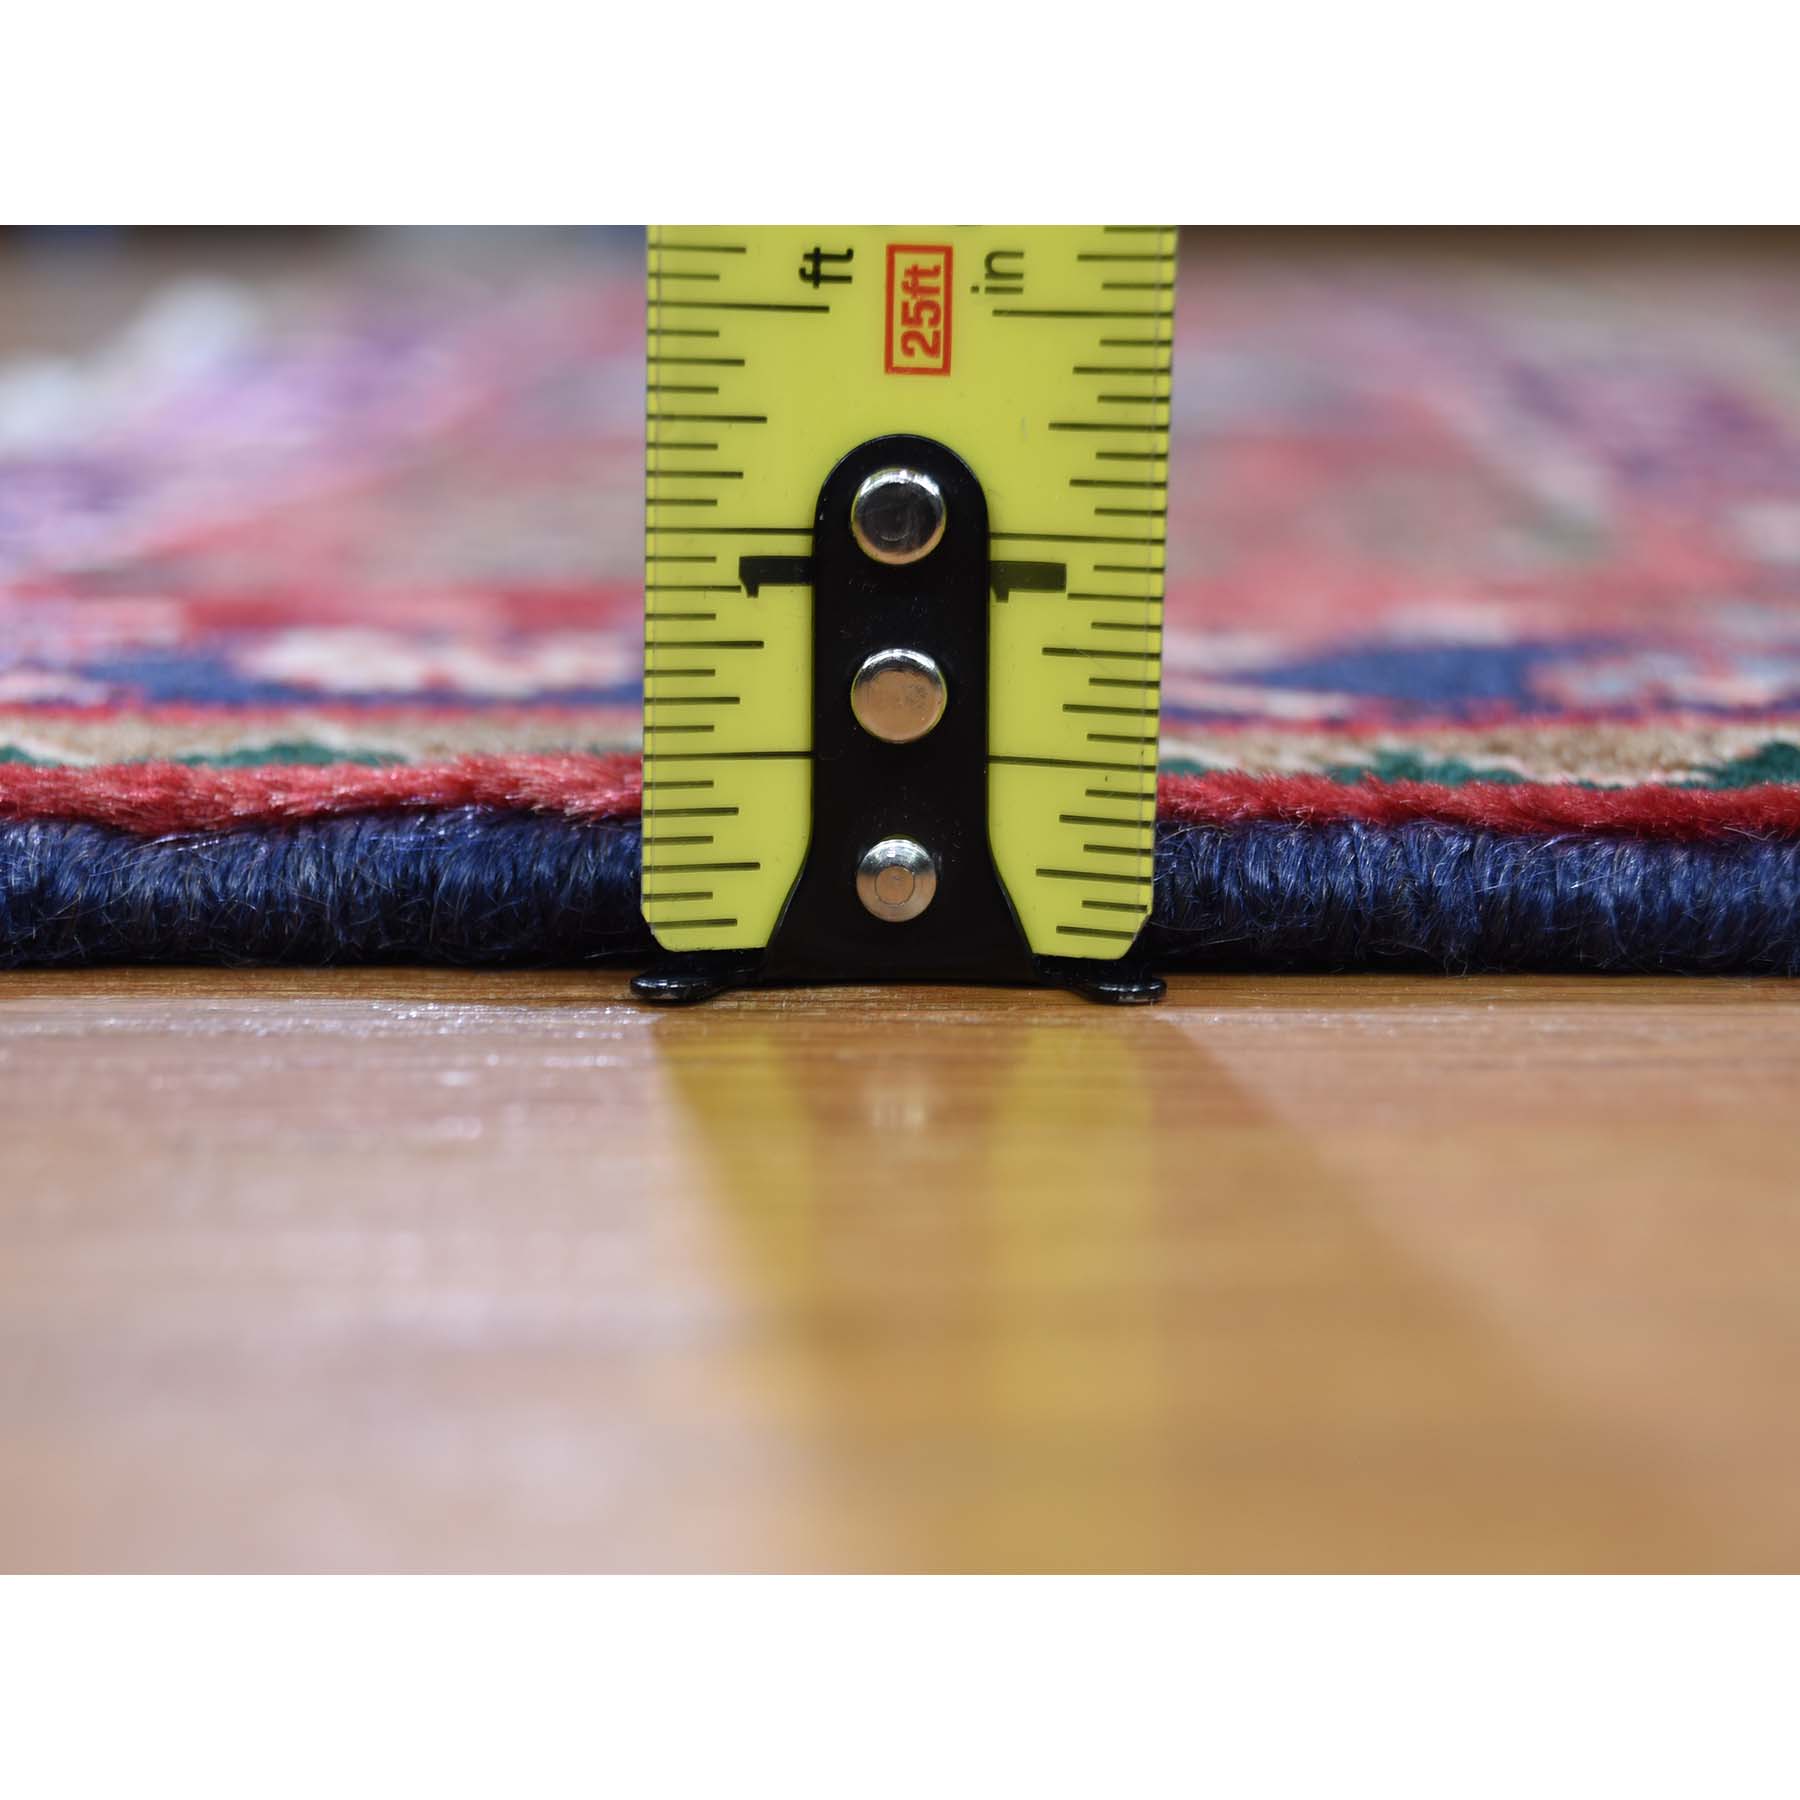 3-6 x4-10  Vintage Persian Nahavand Sampler Pure Wool Hand-Knotted Oriental Rug 